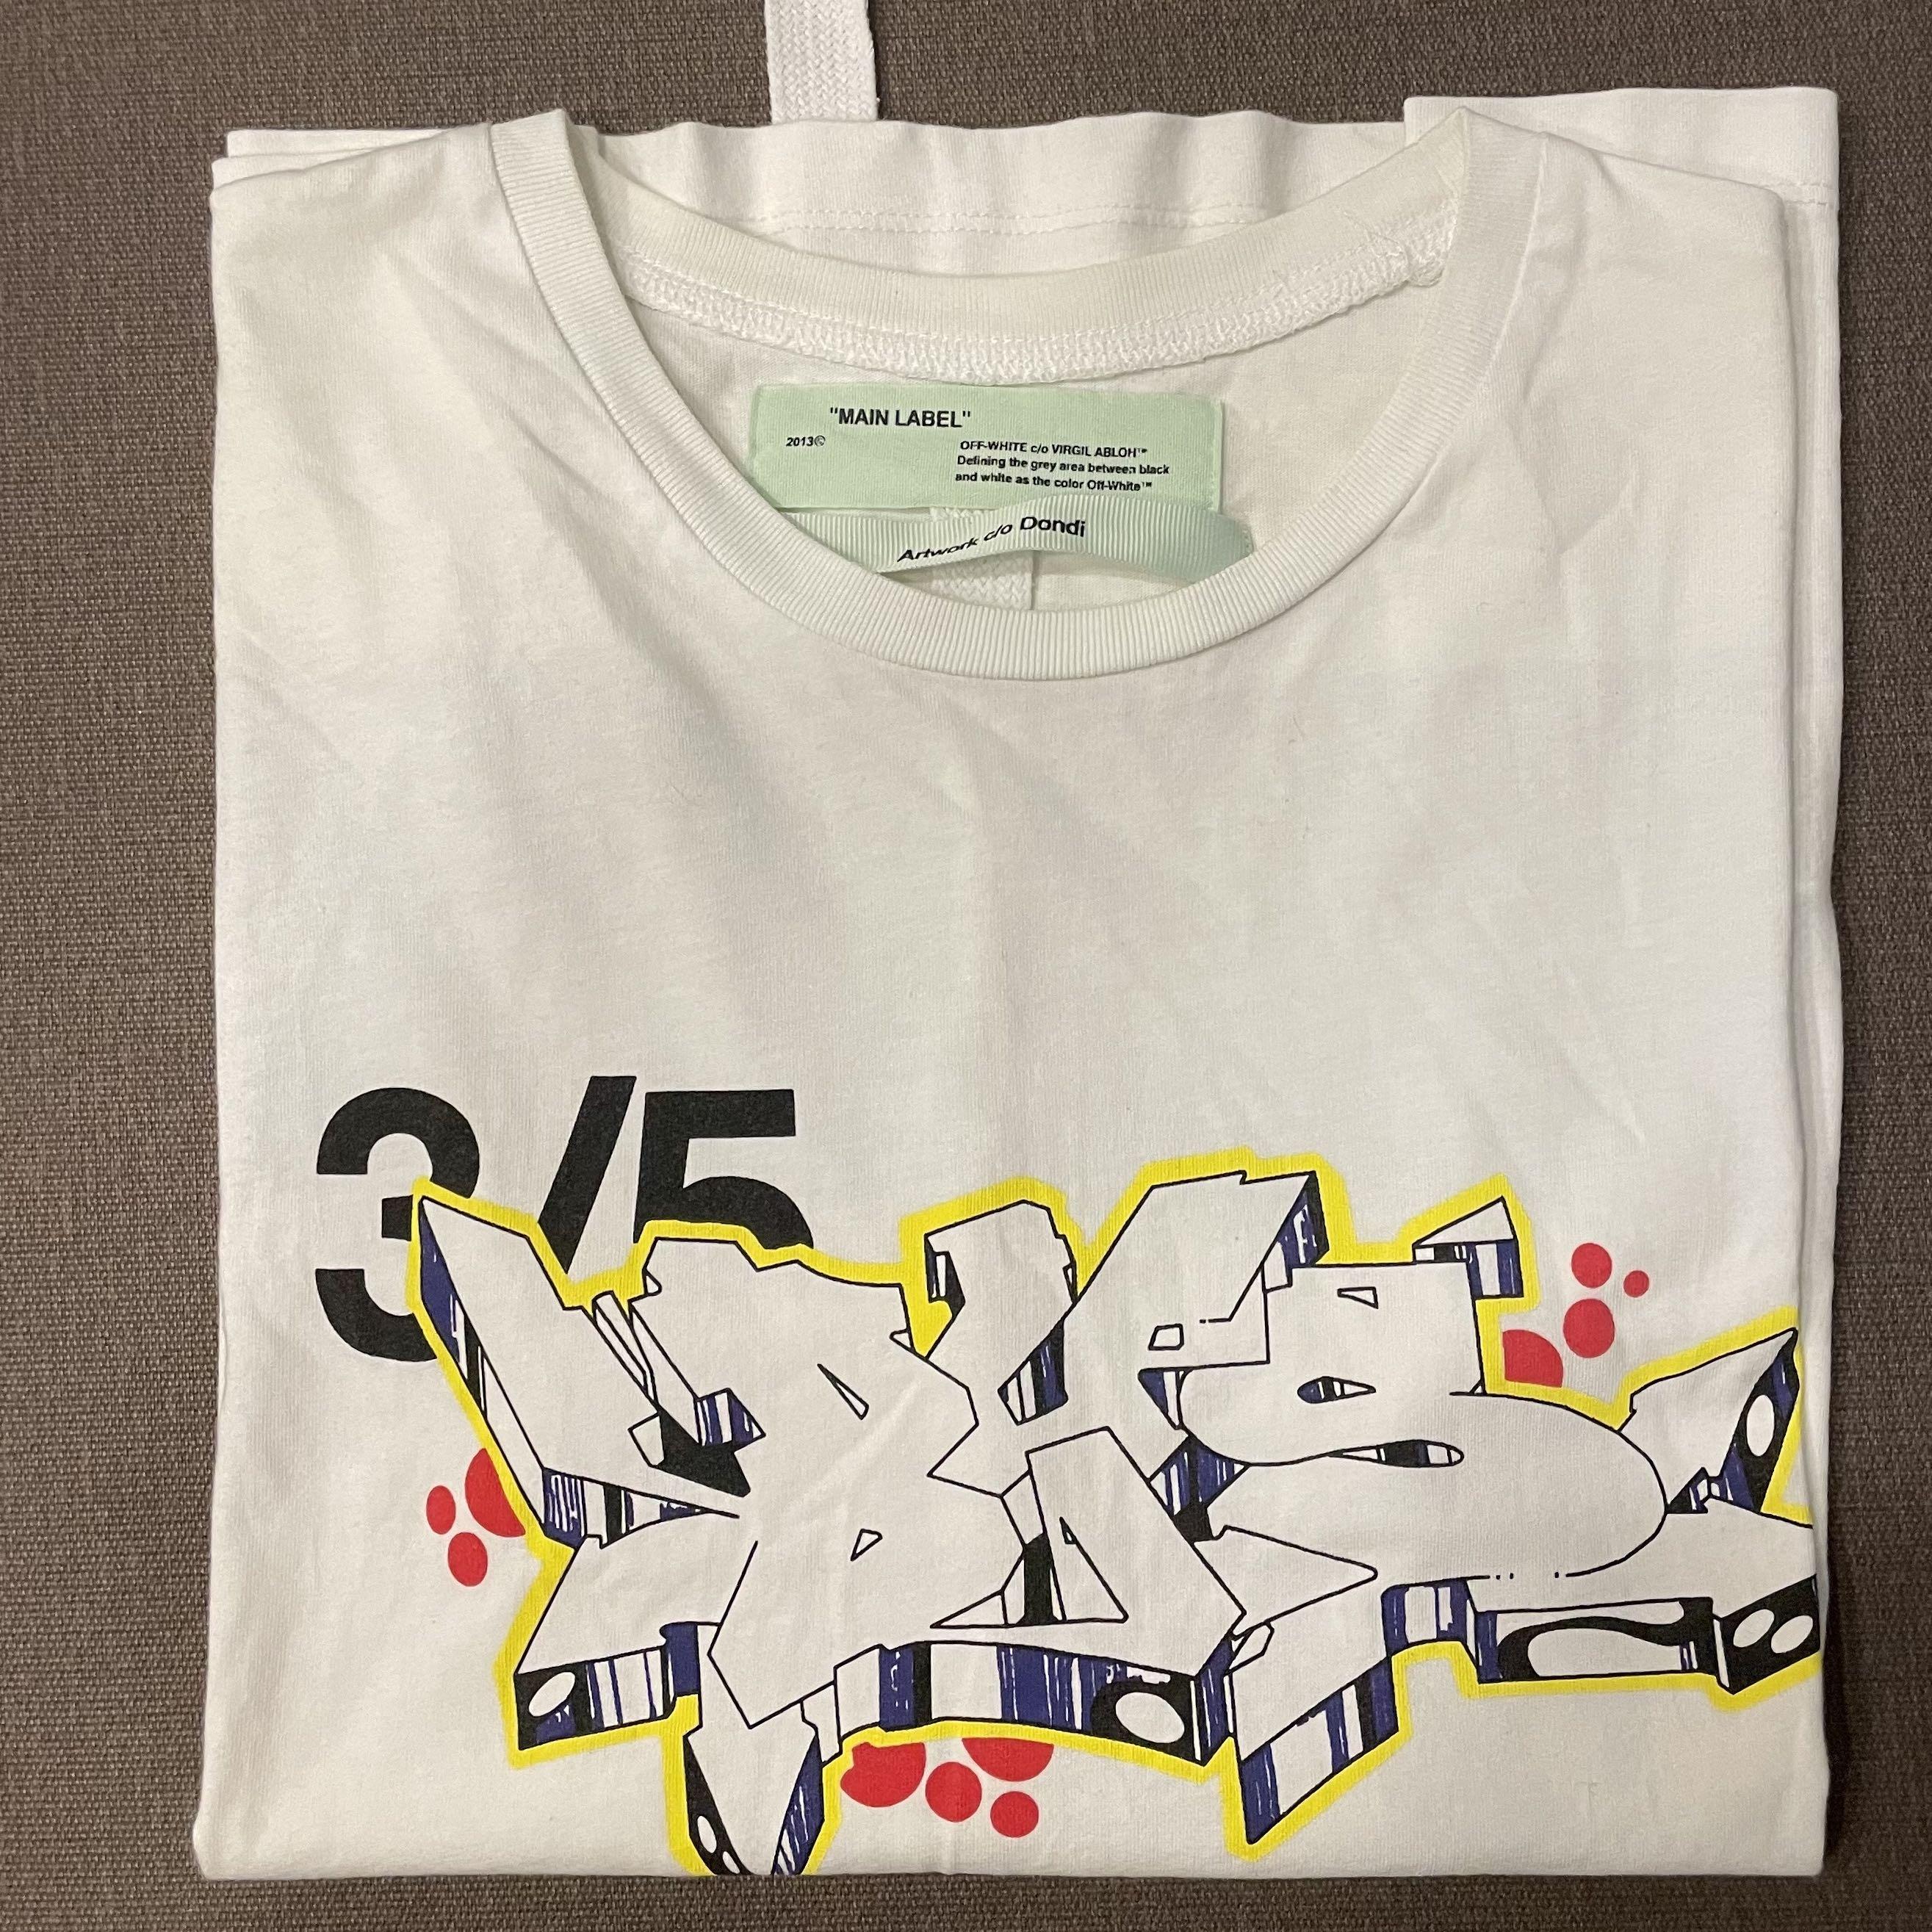 OFF-WHITE Dondi T-shirt 3/5 短袖尺寸S, 名牌精品, 精品服飾在旋轉拍賣